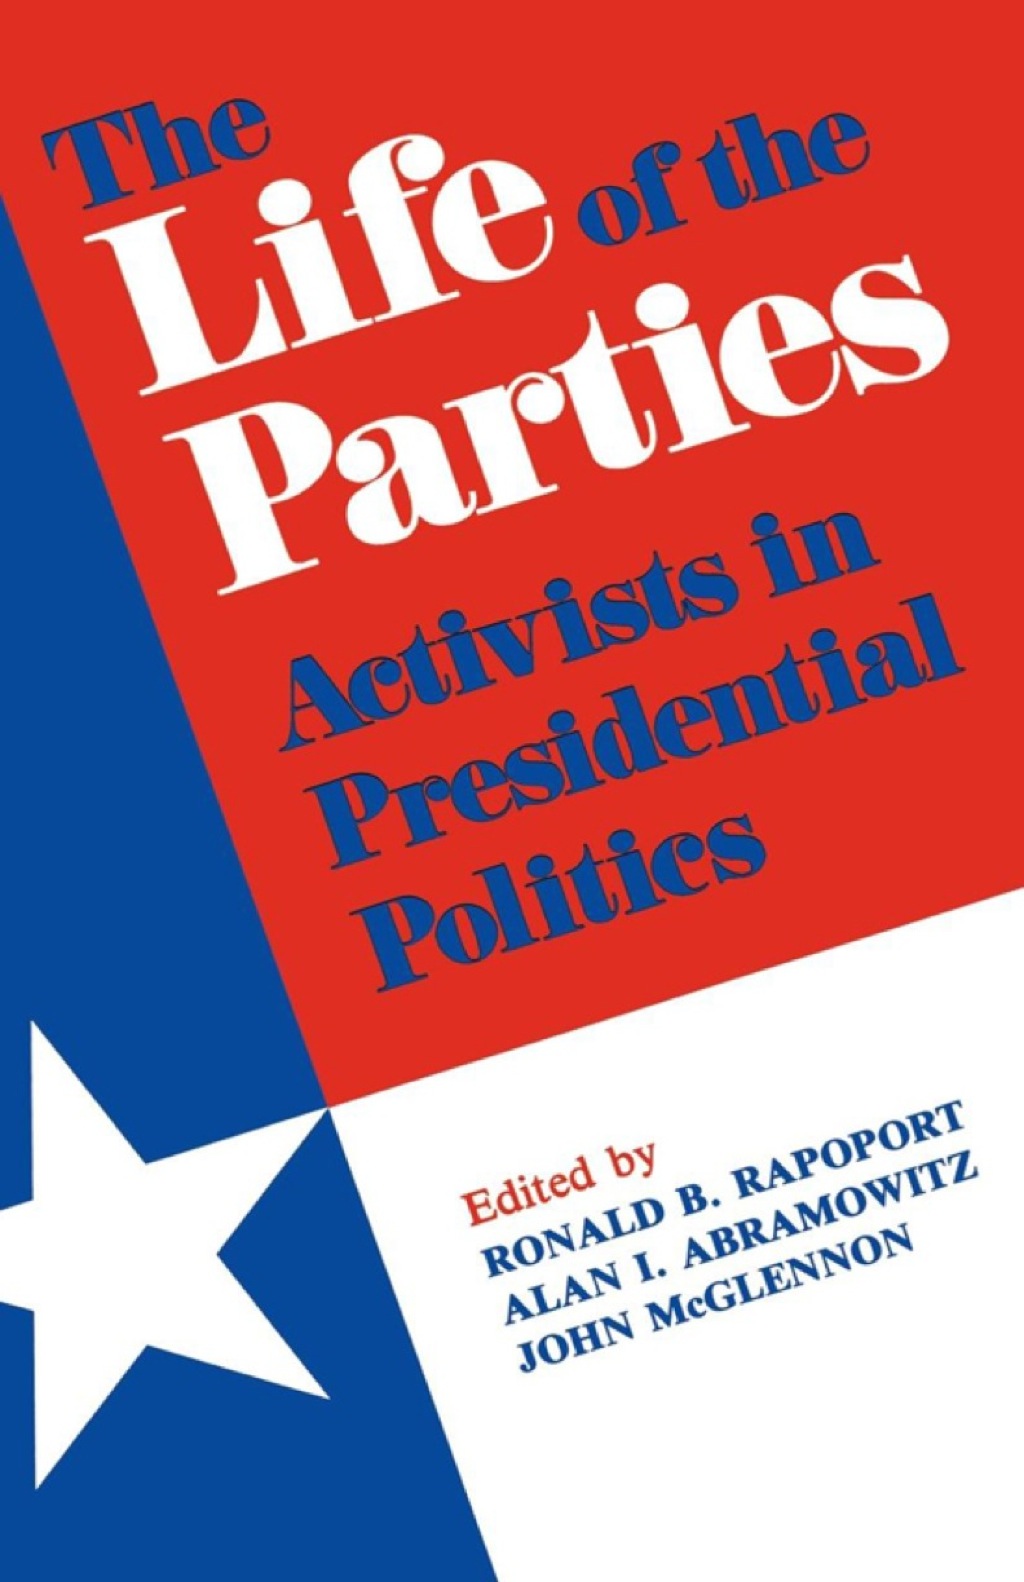 The Life of the Parties (eBook) - Ronald Rapoport; Alan I. McGlennon; John Abramowitz